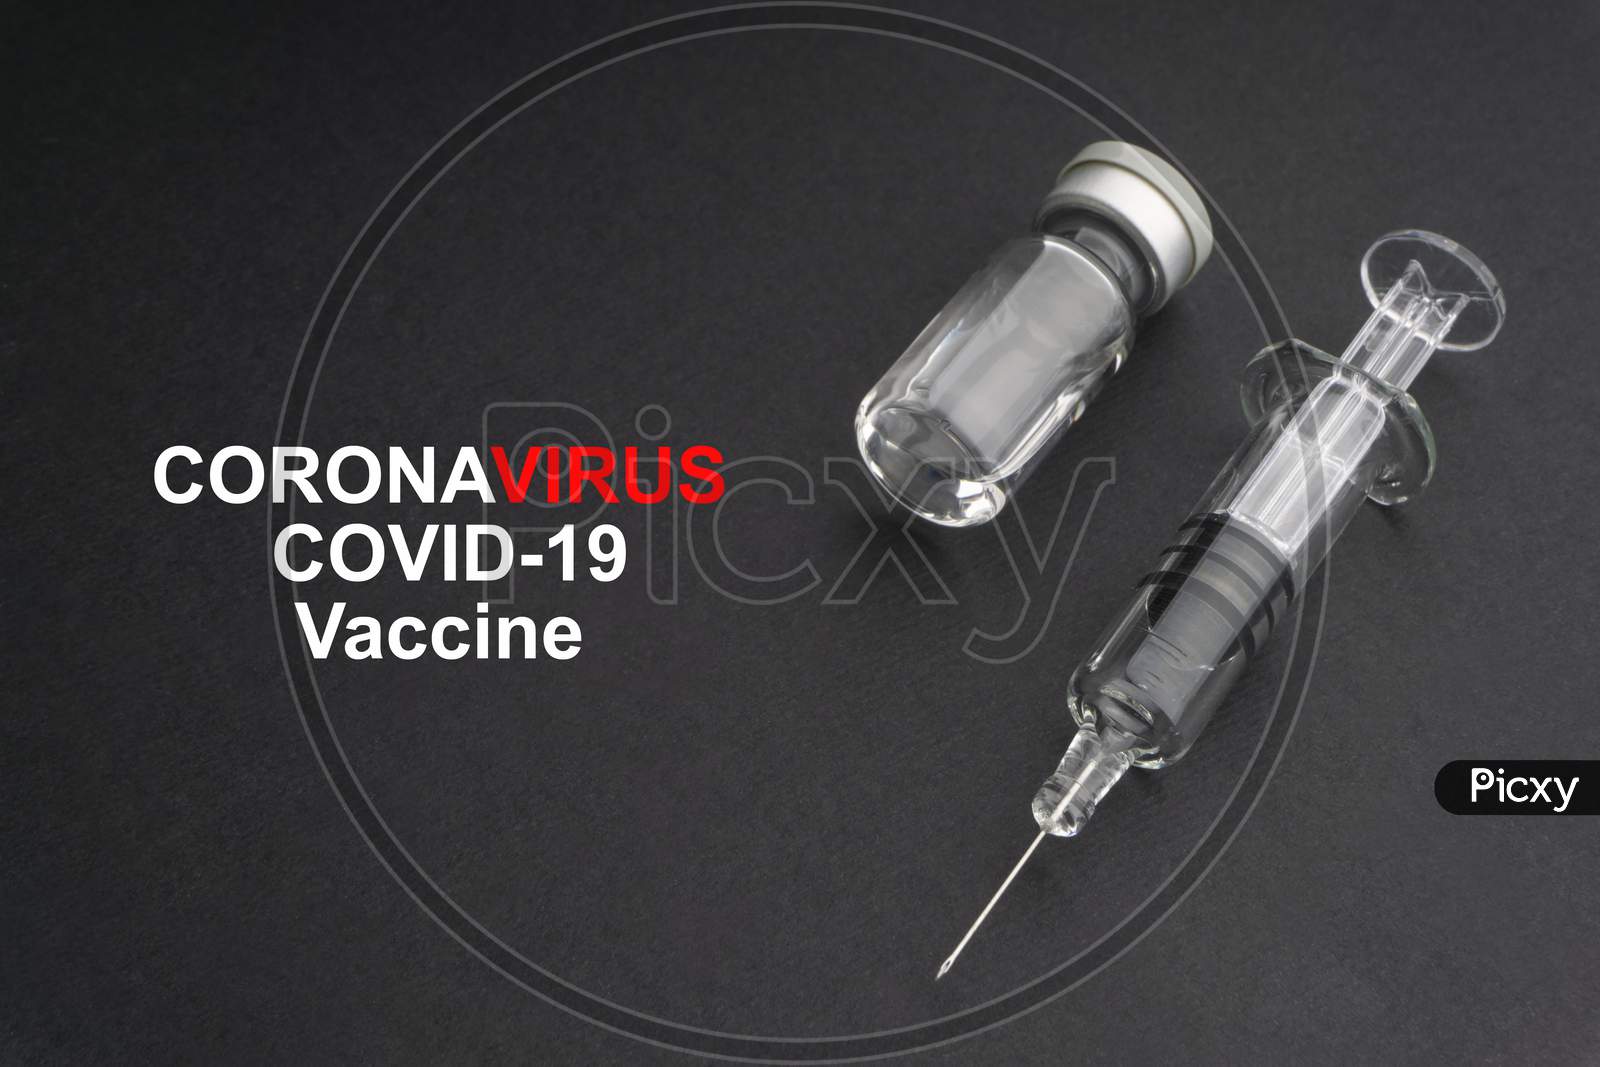 Coronavirus Covid-19 Vaccine Text With Syringe And Vials On Black Background